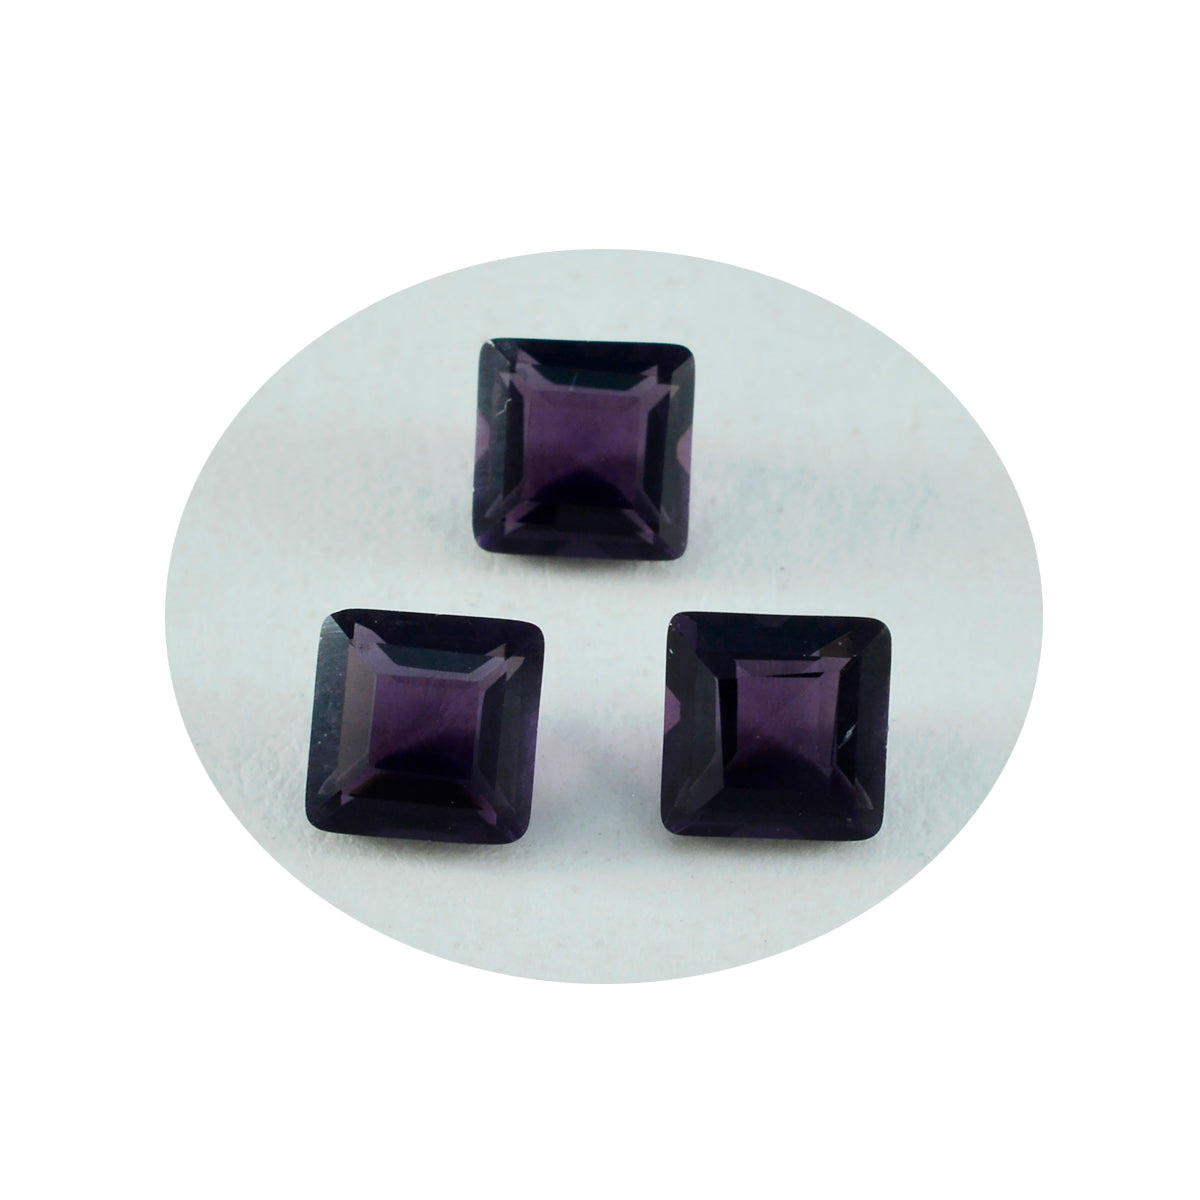 Riyogems 1PC Purple Amethyst CZ Faceted 10x10 mm Square Shape amazing Quality Loose Gems